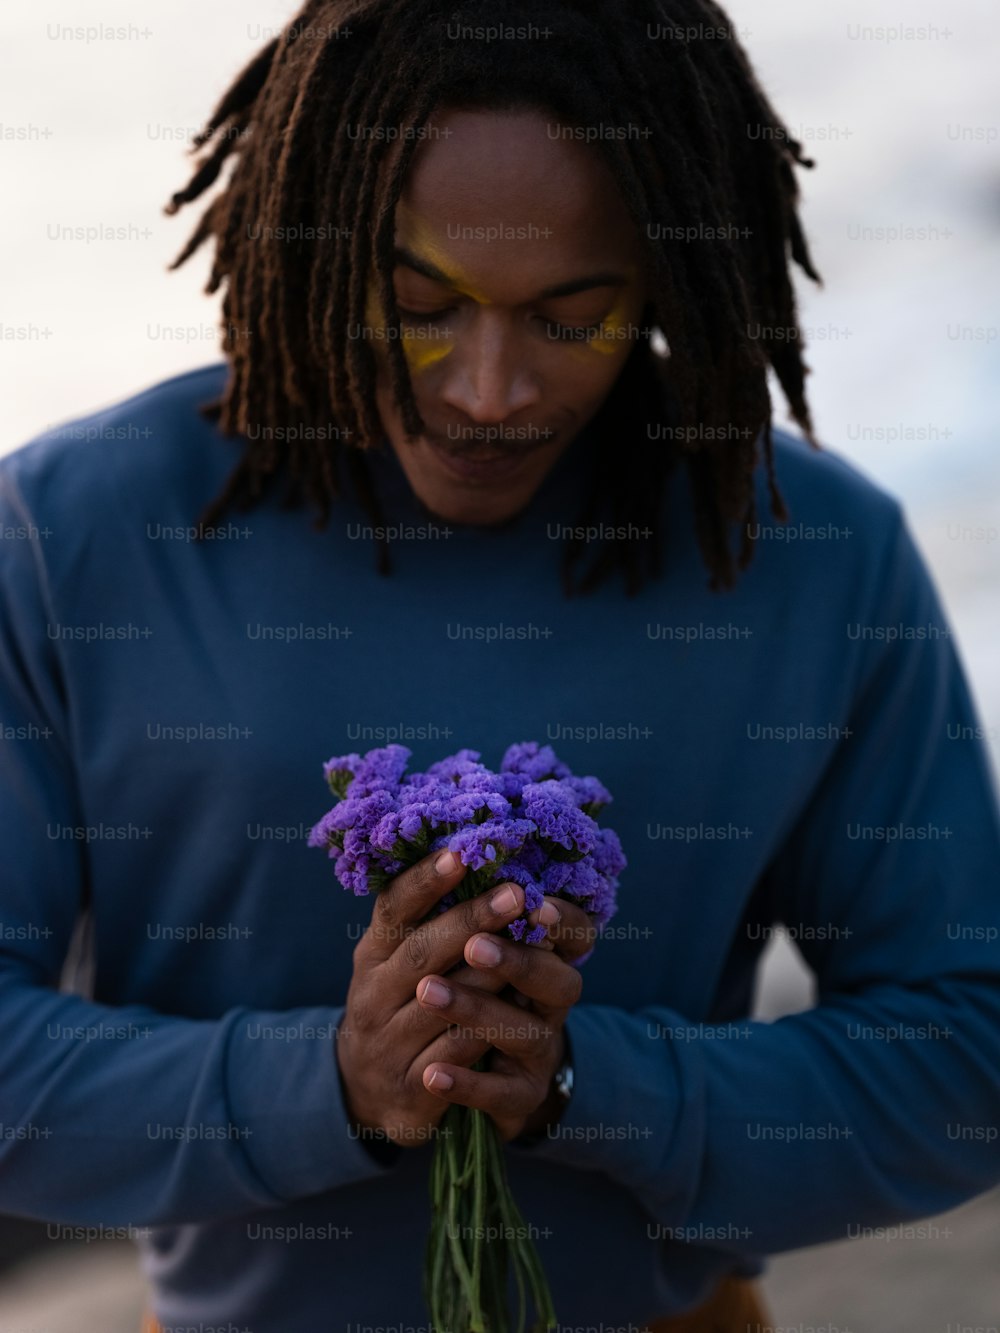 Un hombre sosteniendo un ramo de flores púrpuras